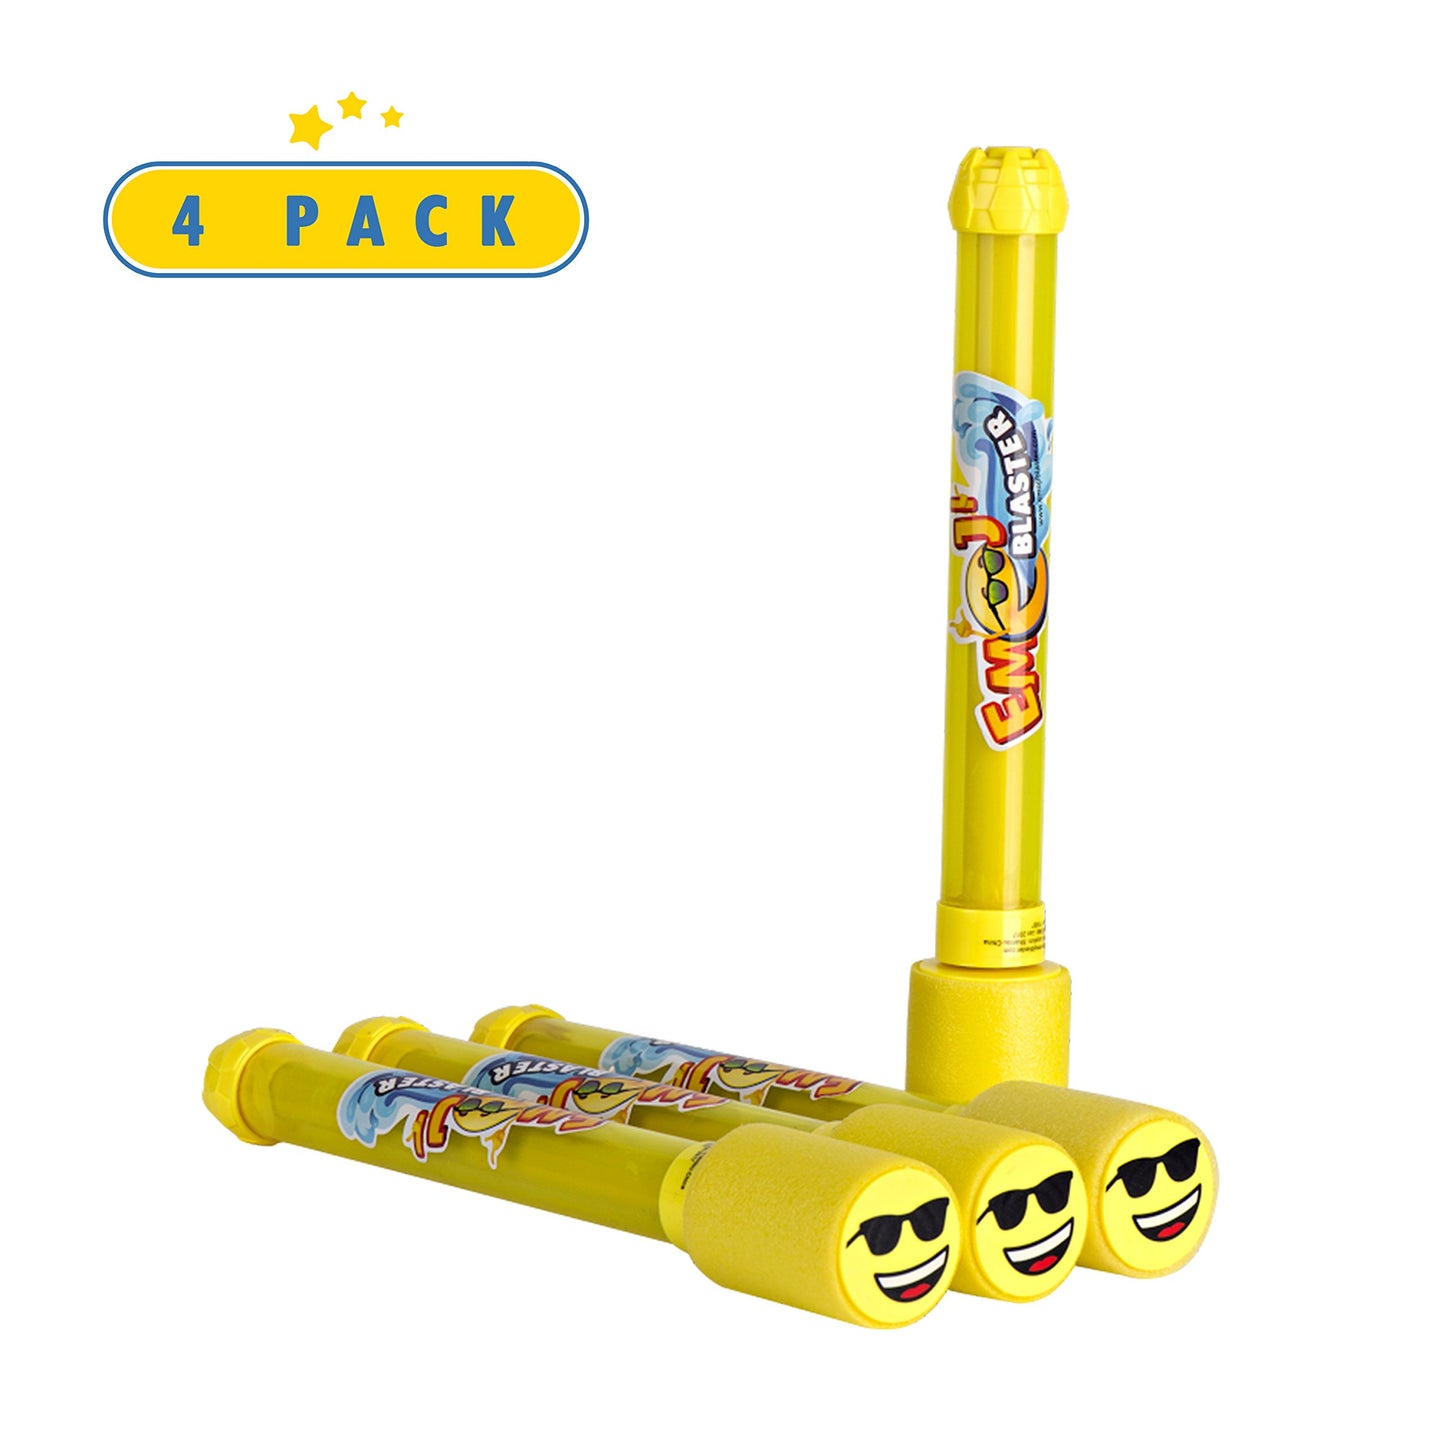 4 Pack Emoji Water Blaster - 10.5" Foam Water Gun - Light Weight Water Soaker - Water Shooter- Summer Pool Beach Water Toy For Kids